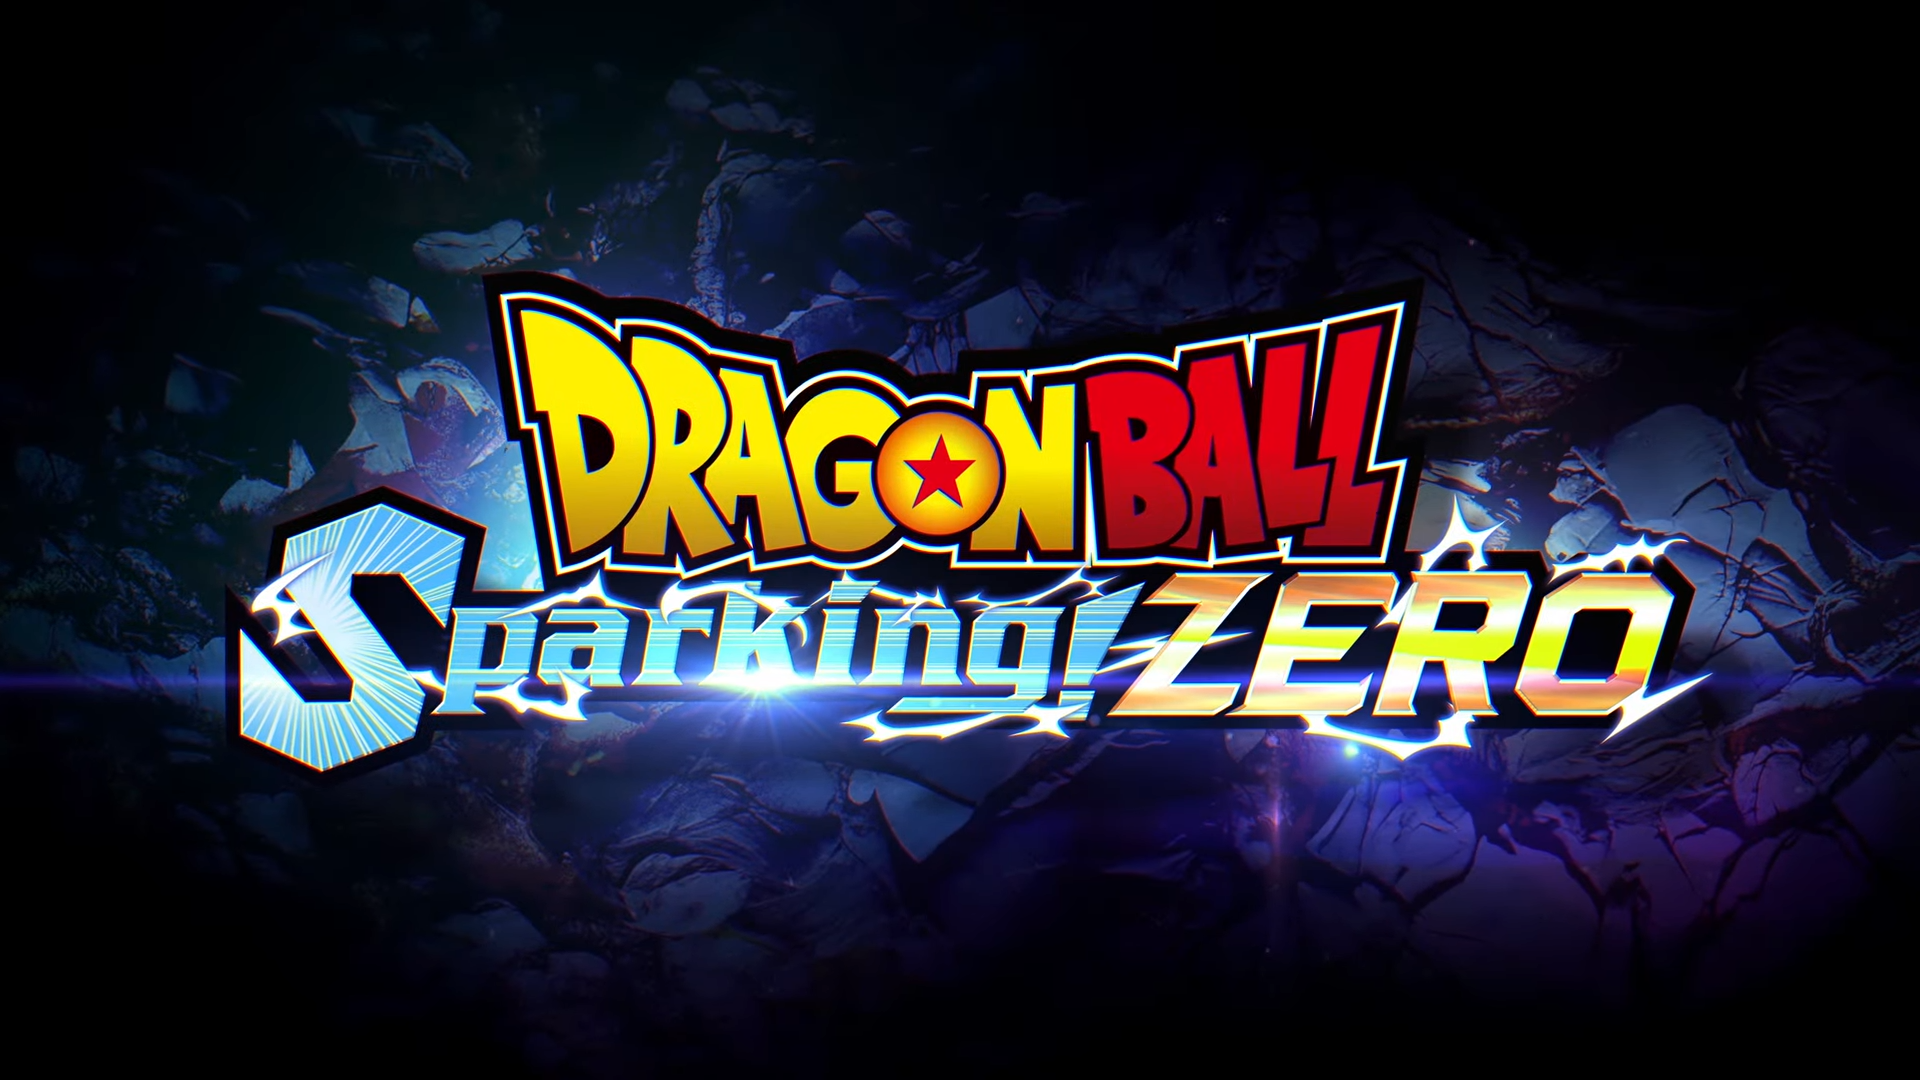 Dragon Ball Z: Tenkaichi Tag Team, Dragon Ball Wiki